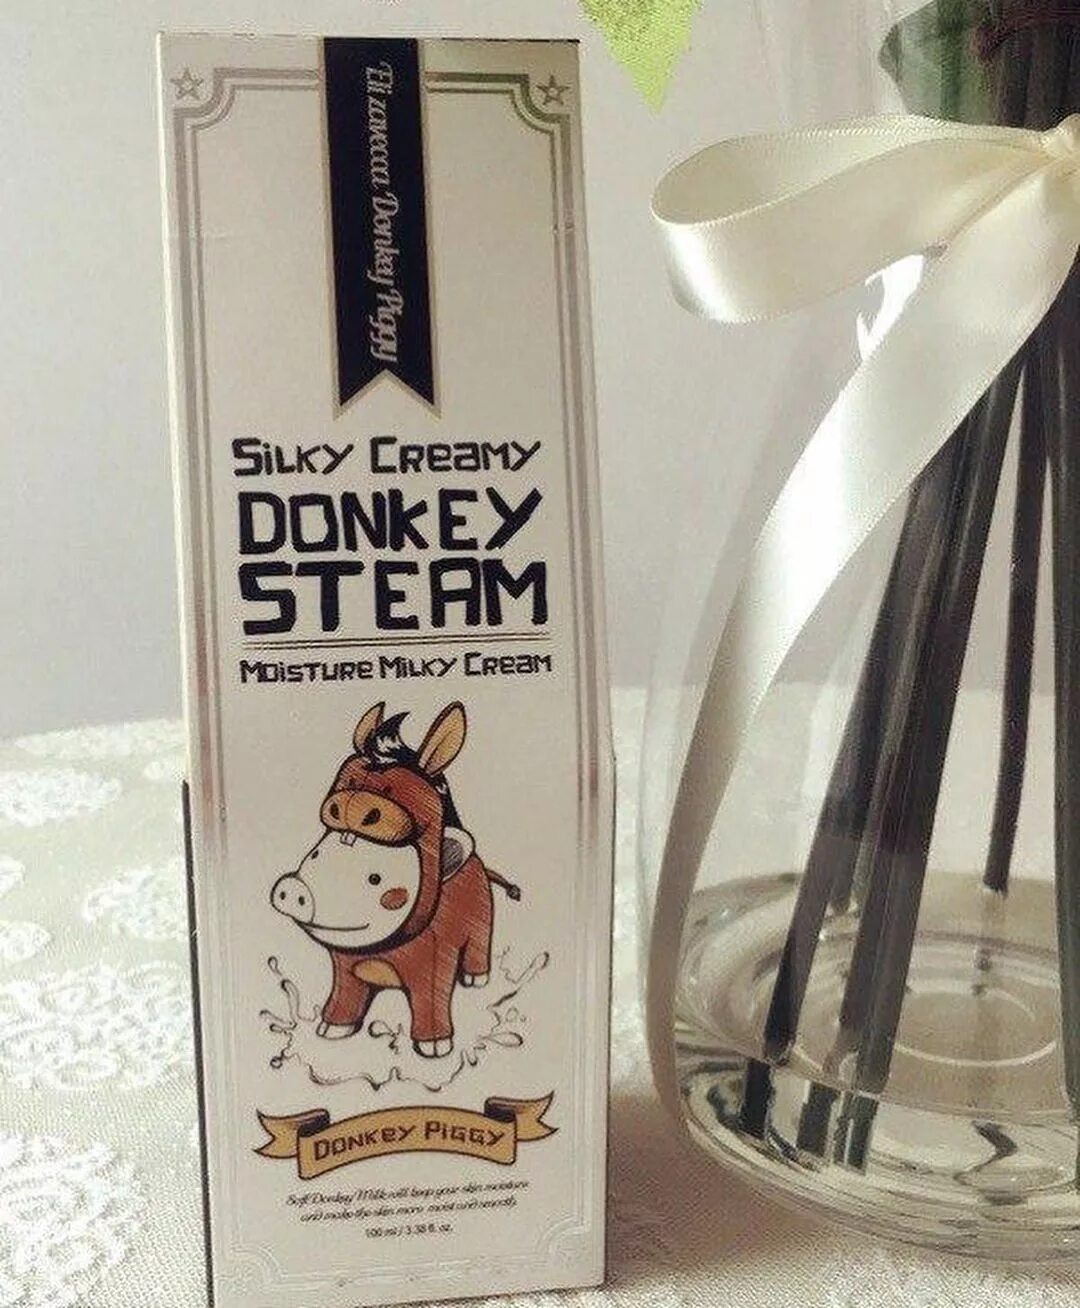 Silky cream donkey steam moisture milky cream фото 35